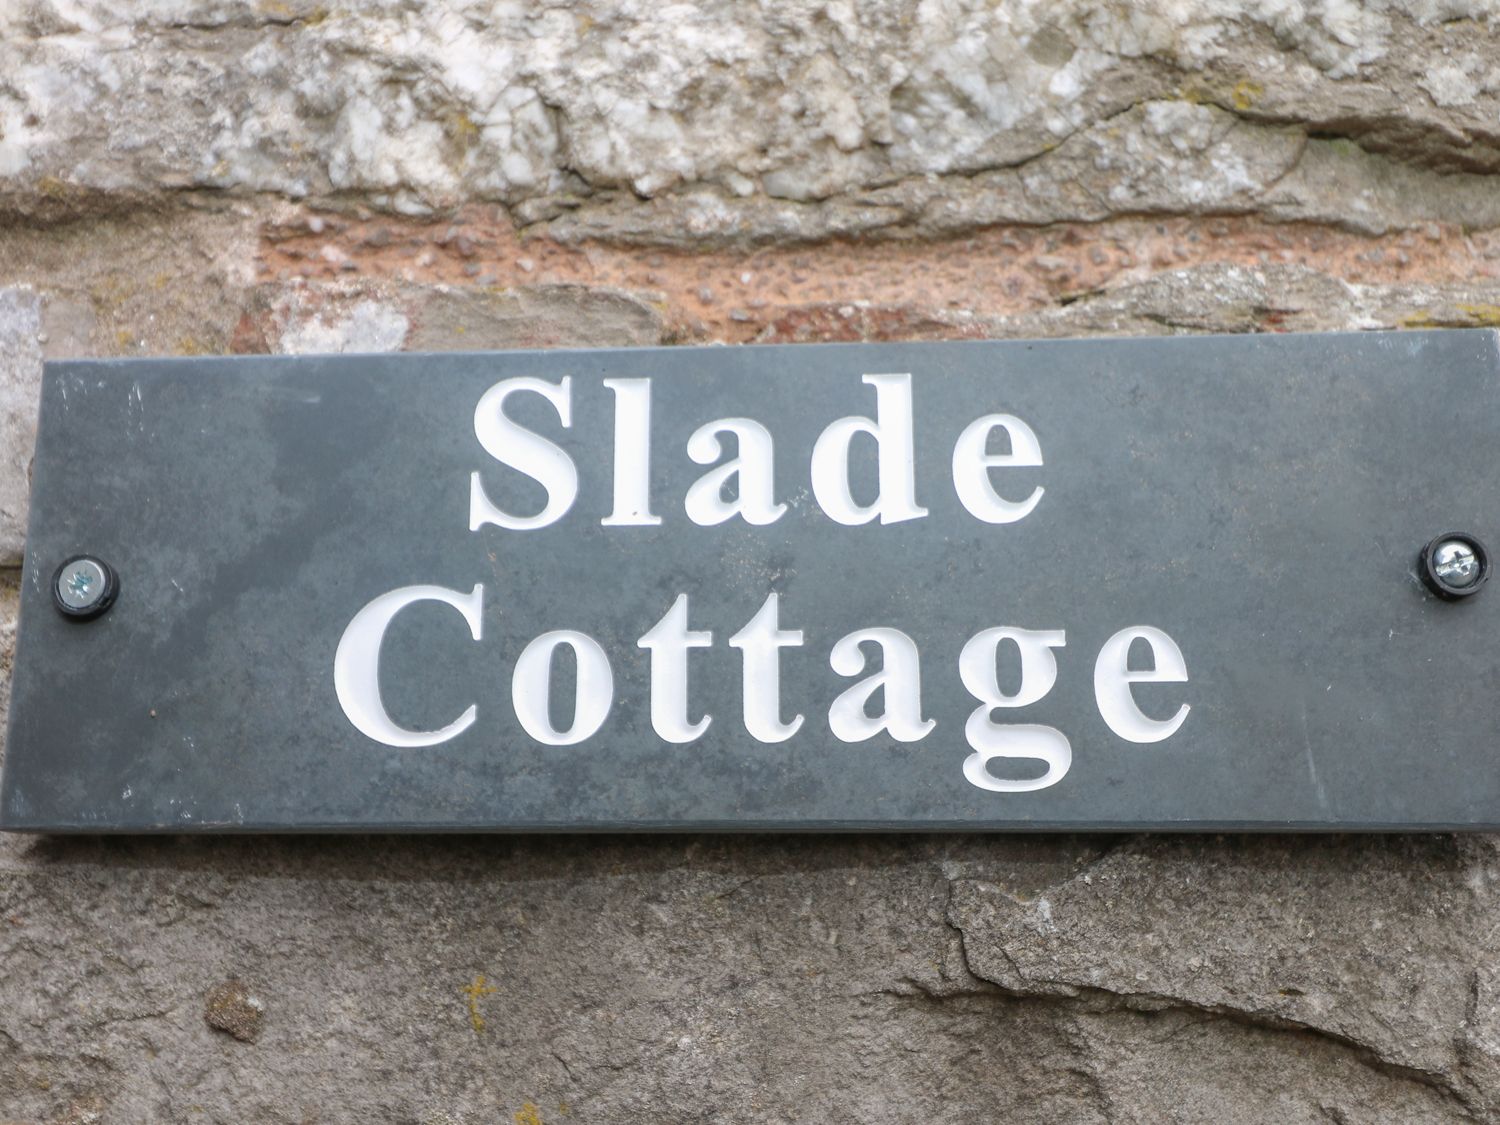 Slade Cottage, Staffordshire